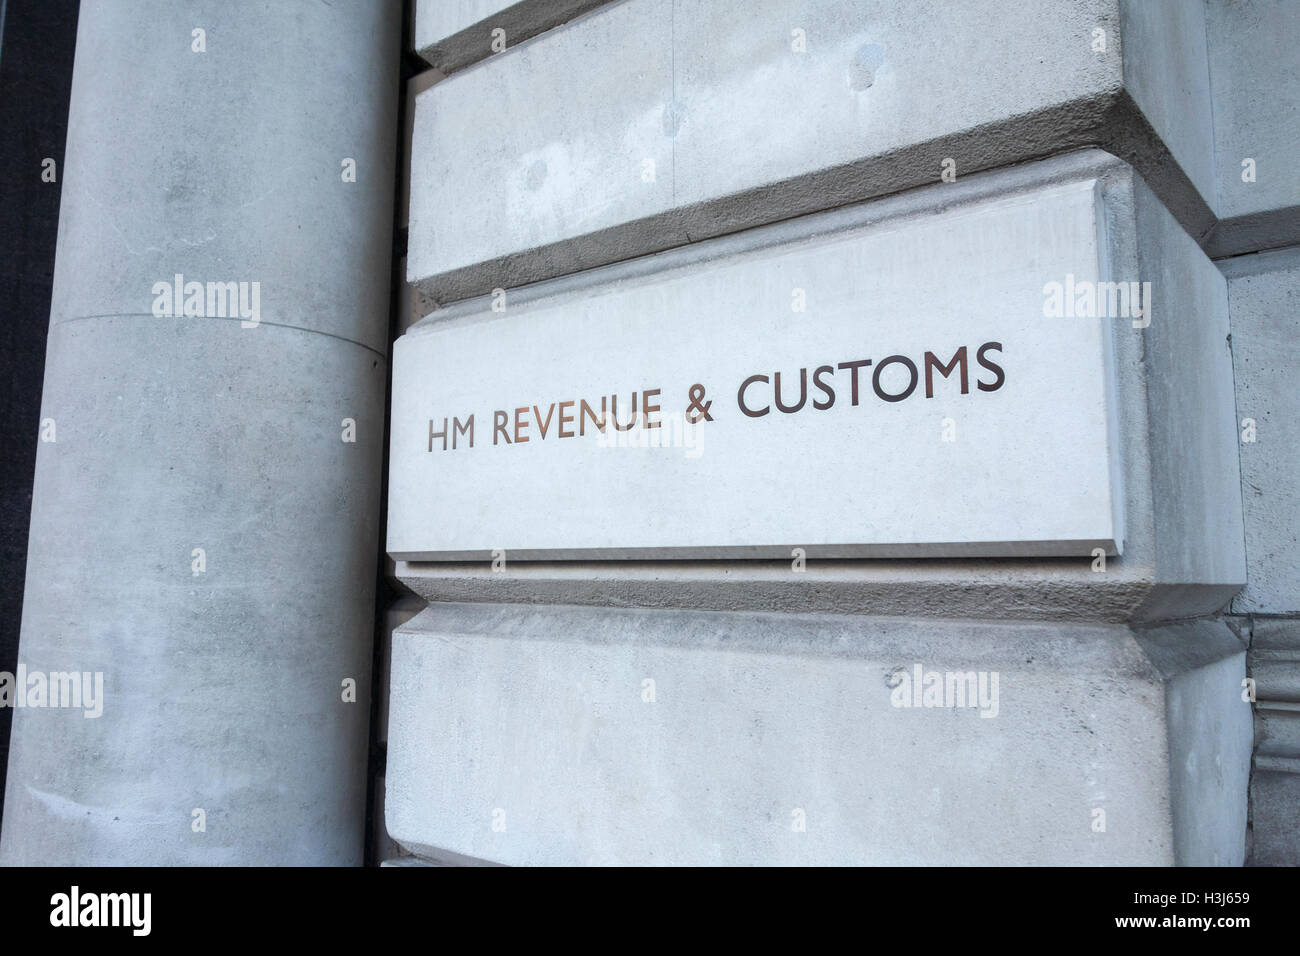 HM Revenue & Customs building sign. London, UK Stock Photo